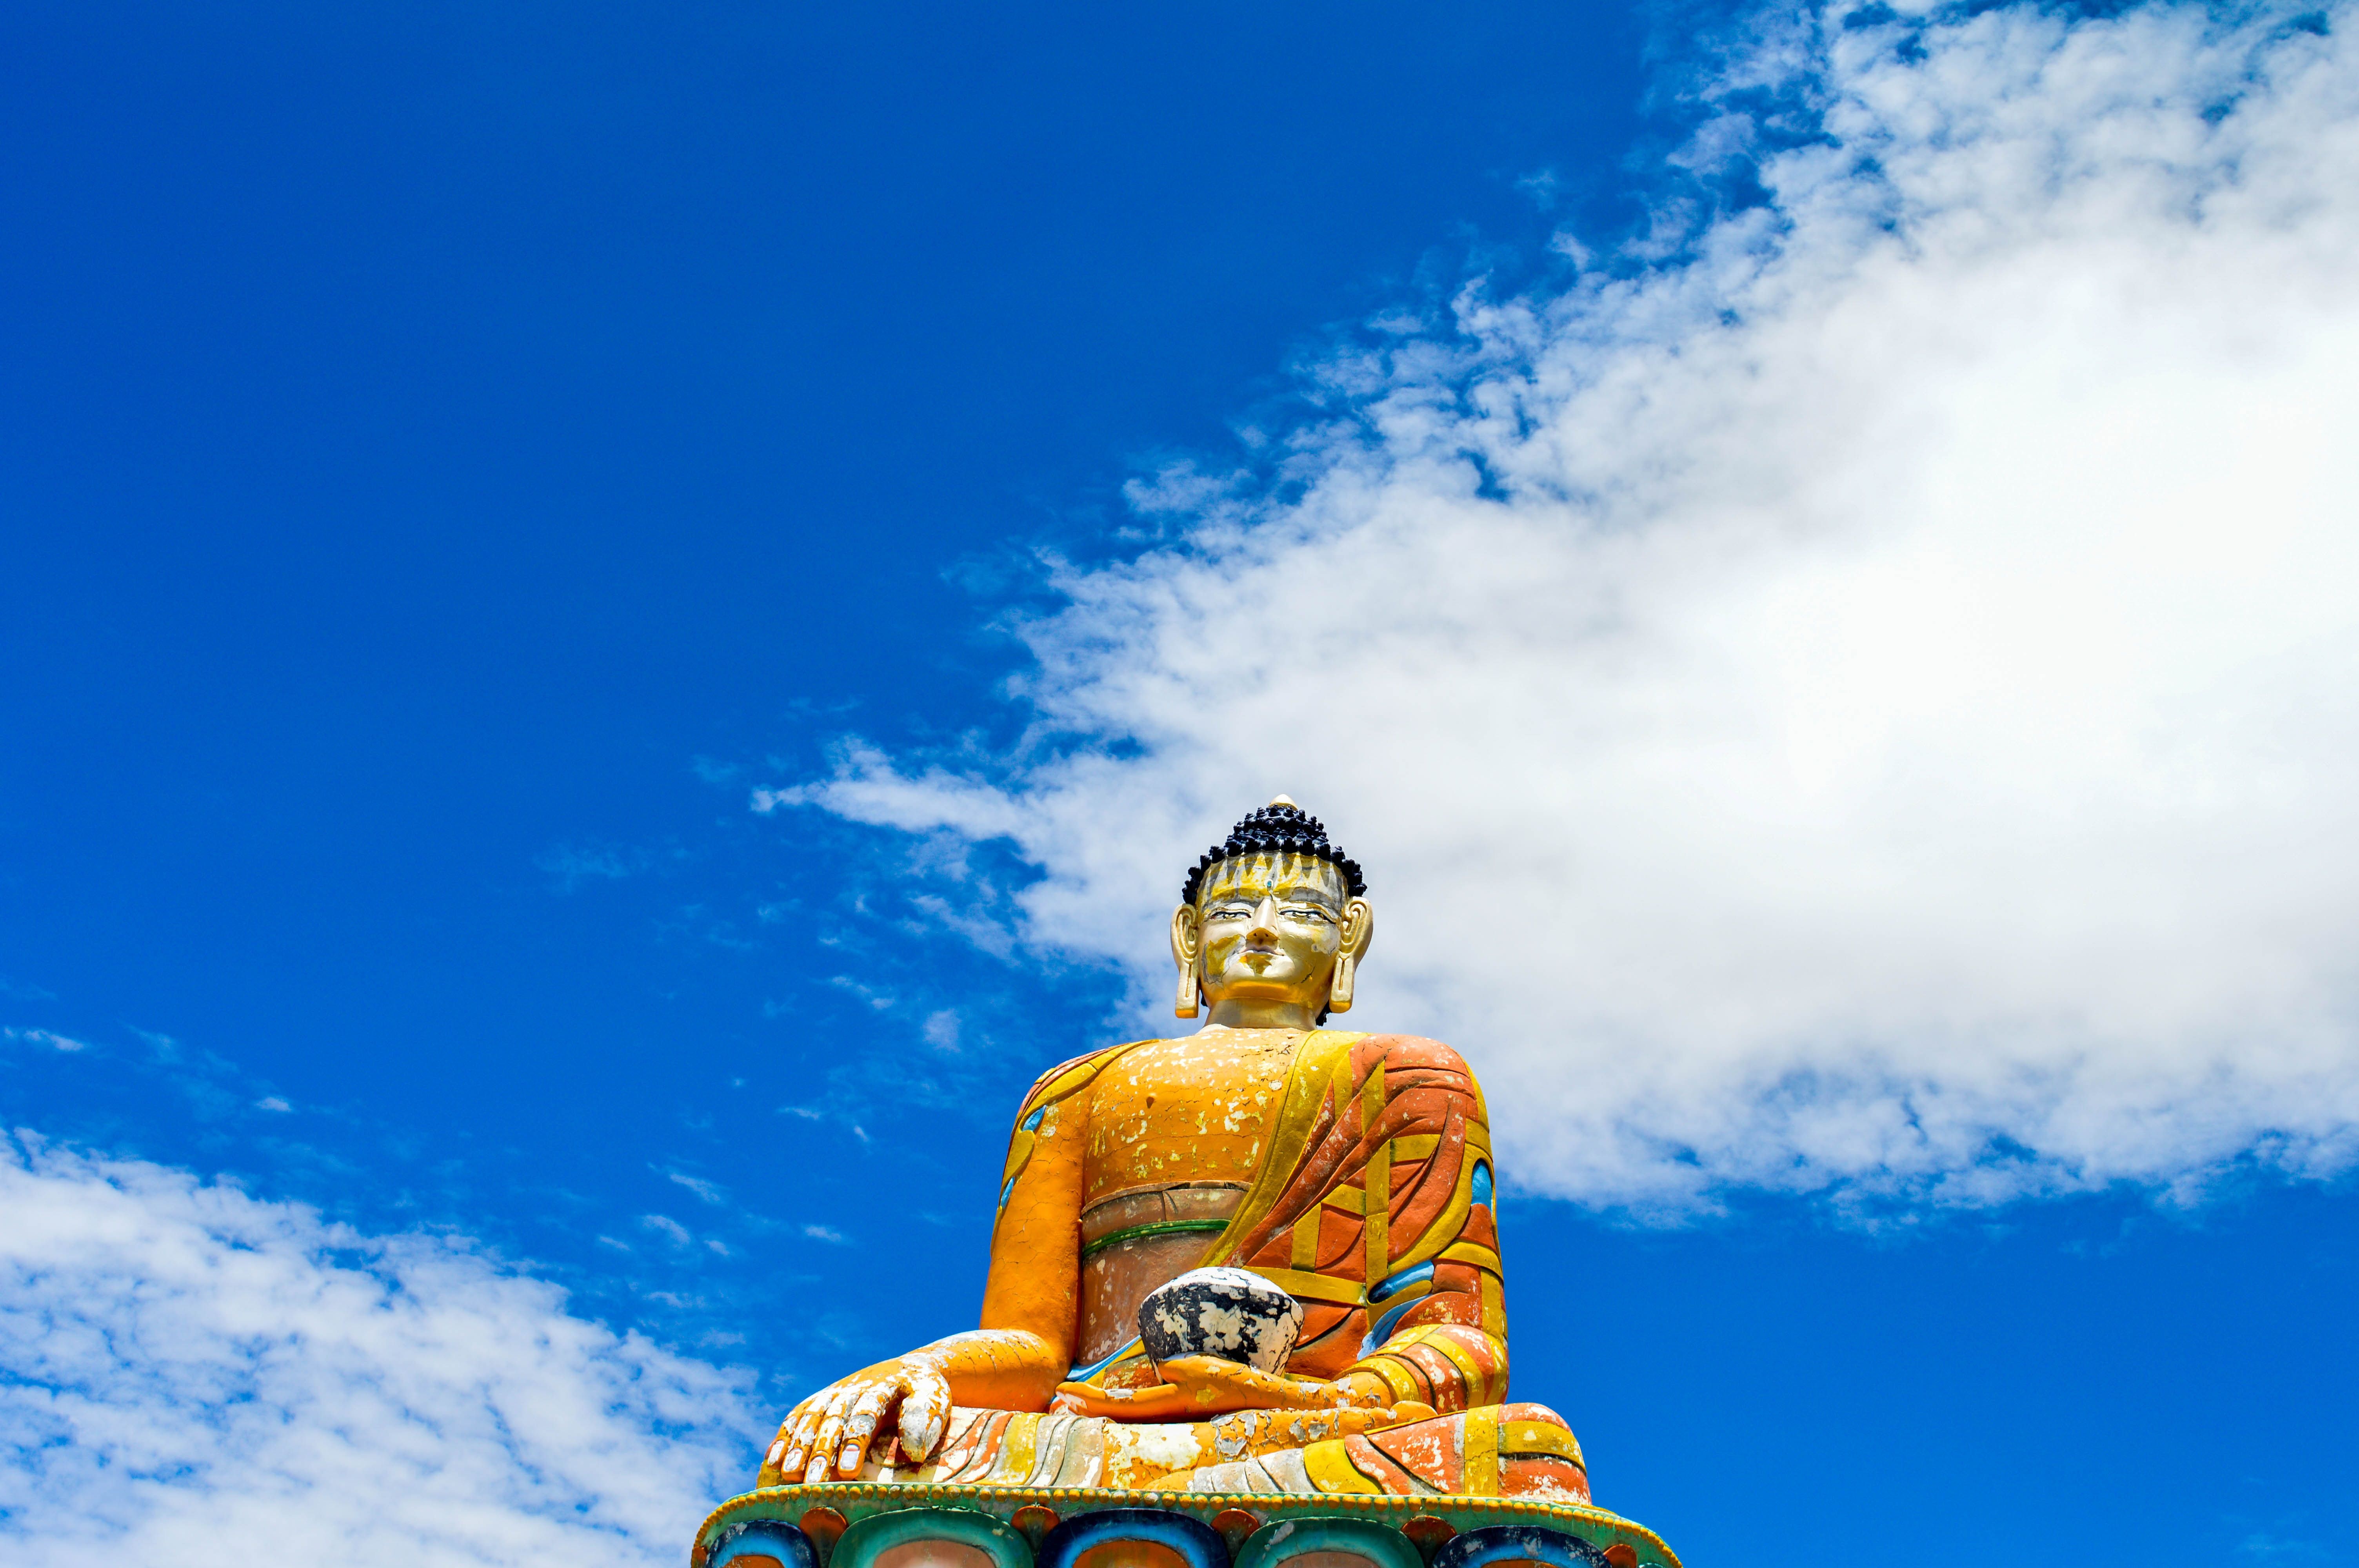 Visit the Buddha Statue